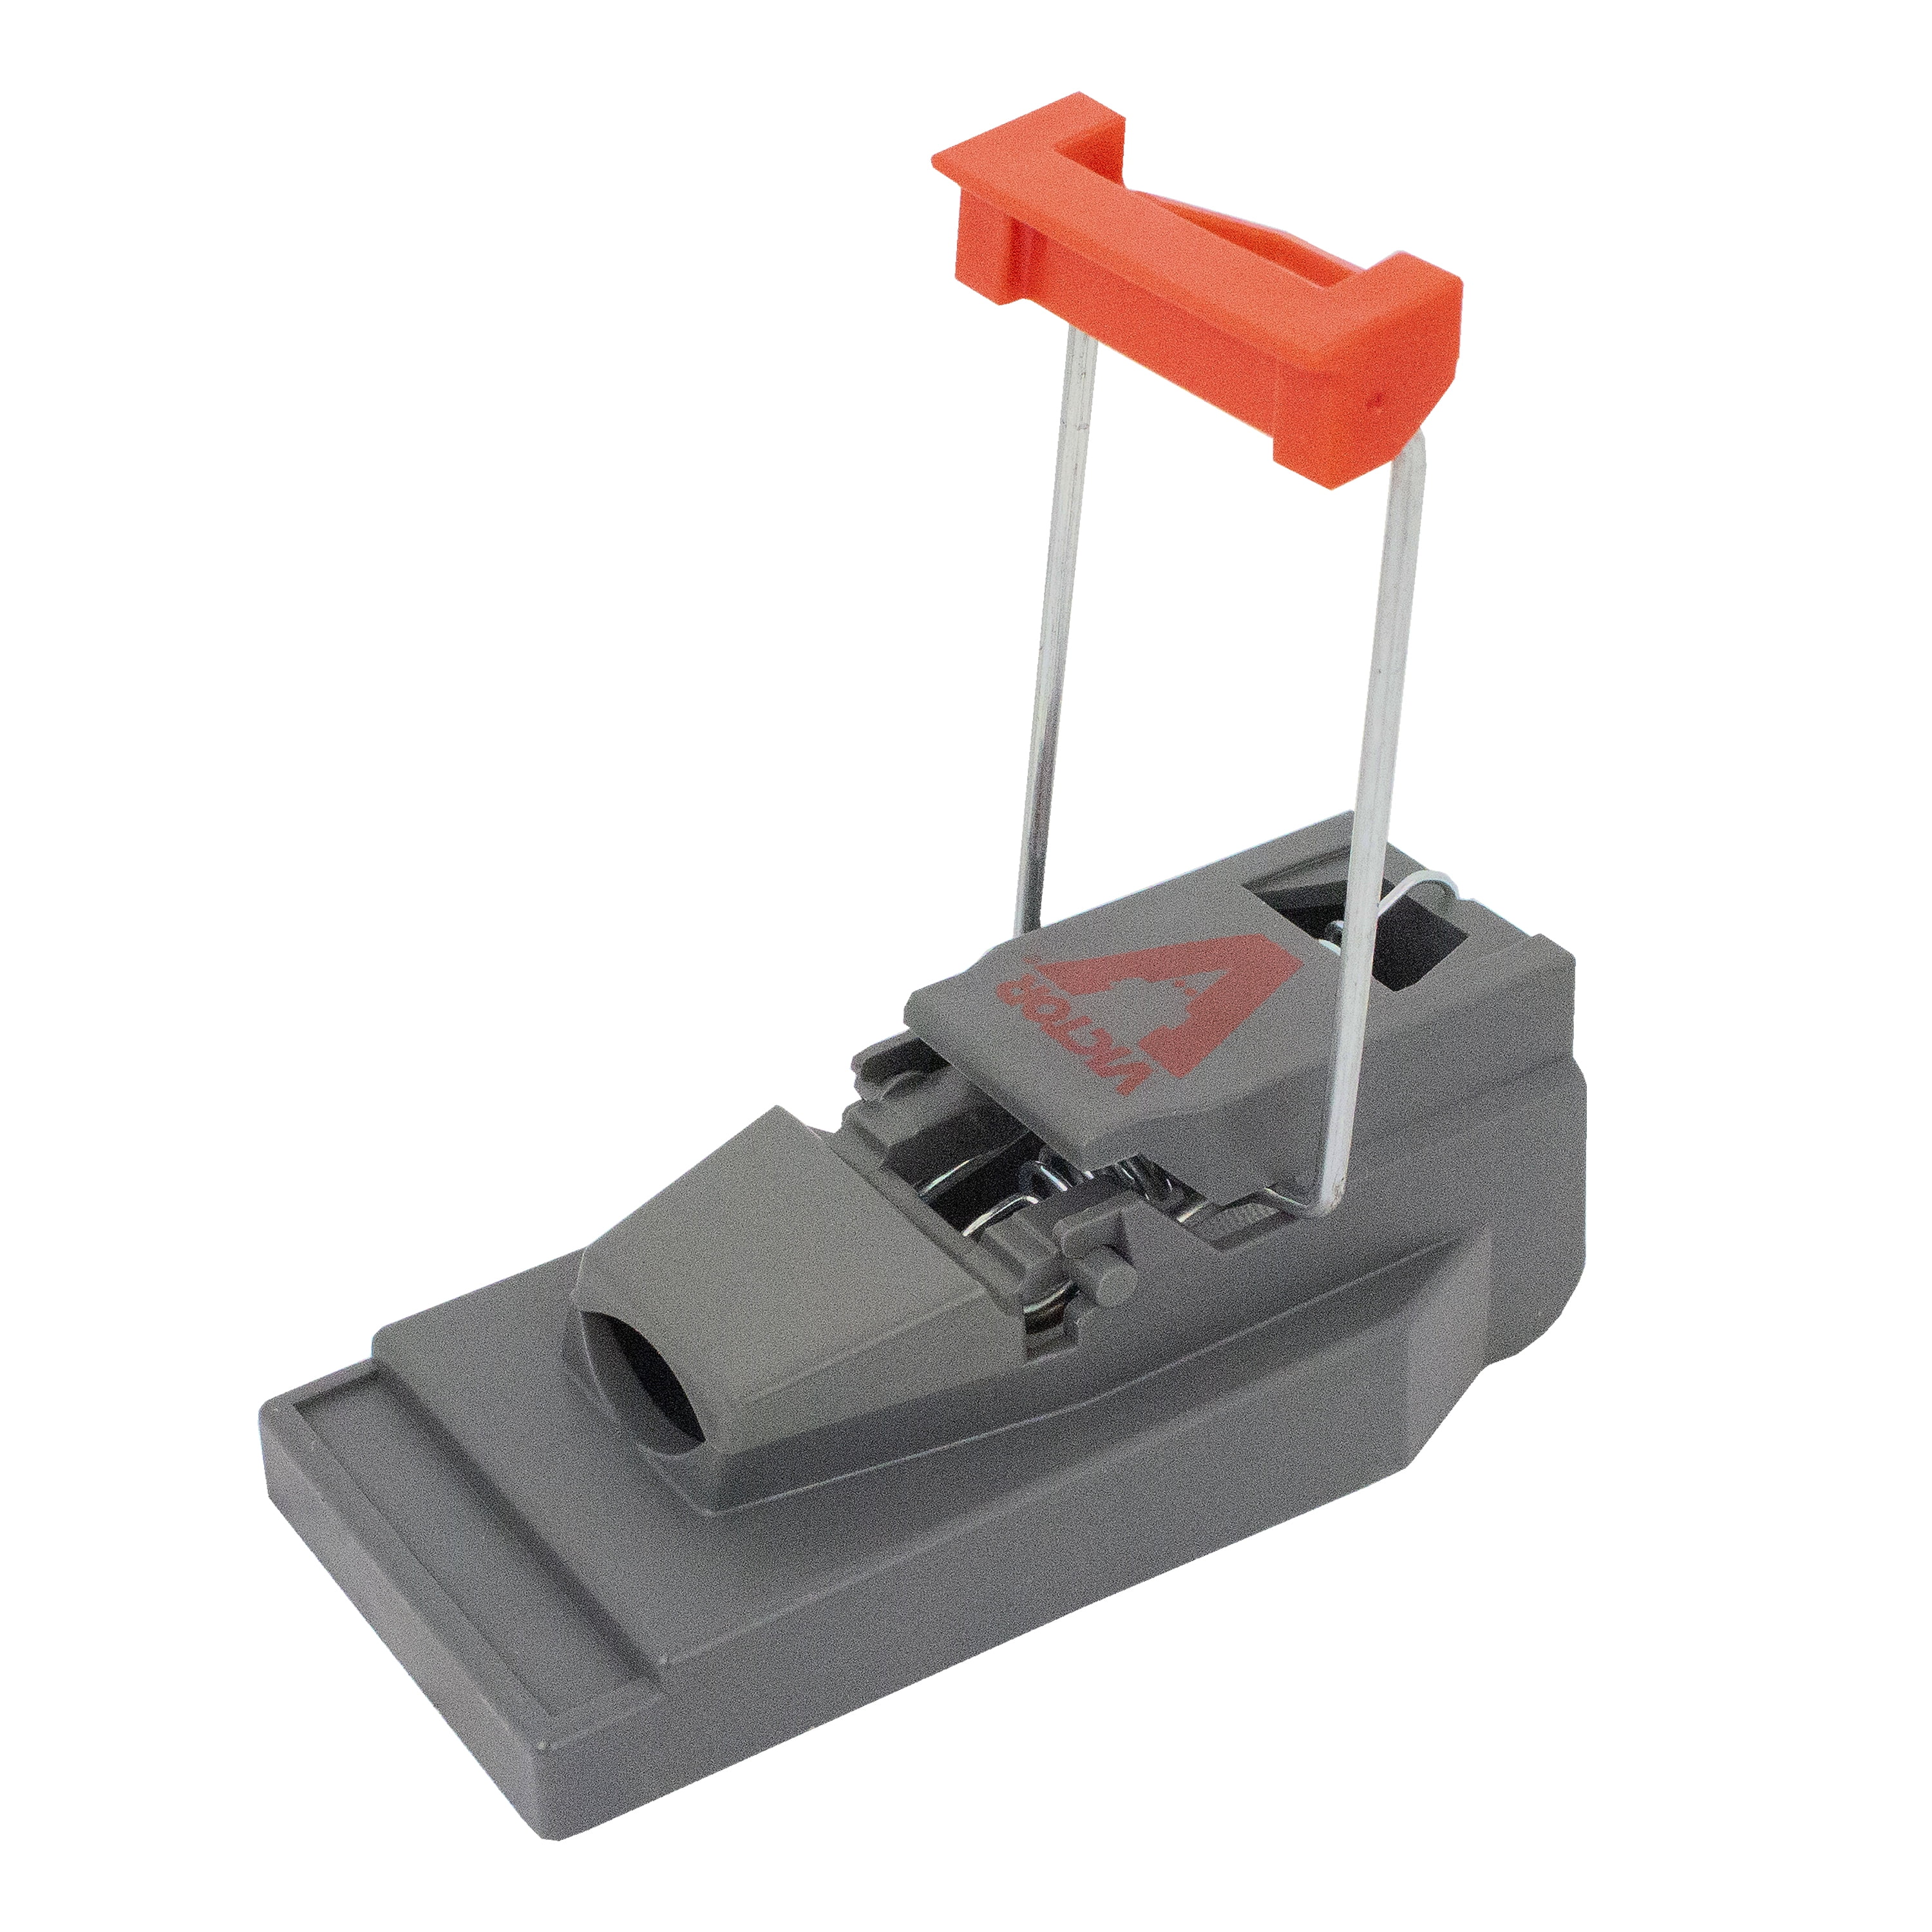 Victor M123 Quick-Kill Easy Set Mouse Trap - 3 Reusable Mouse Traps